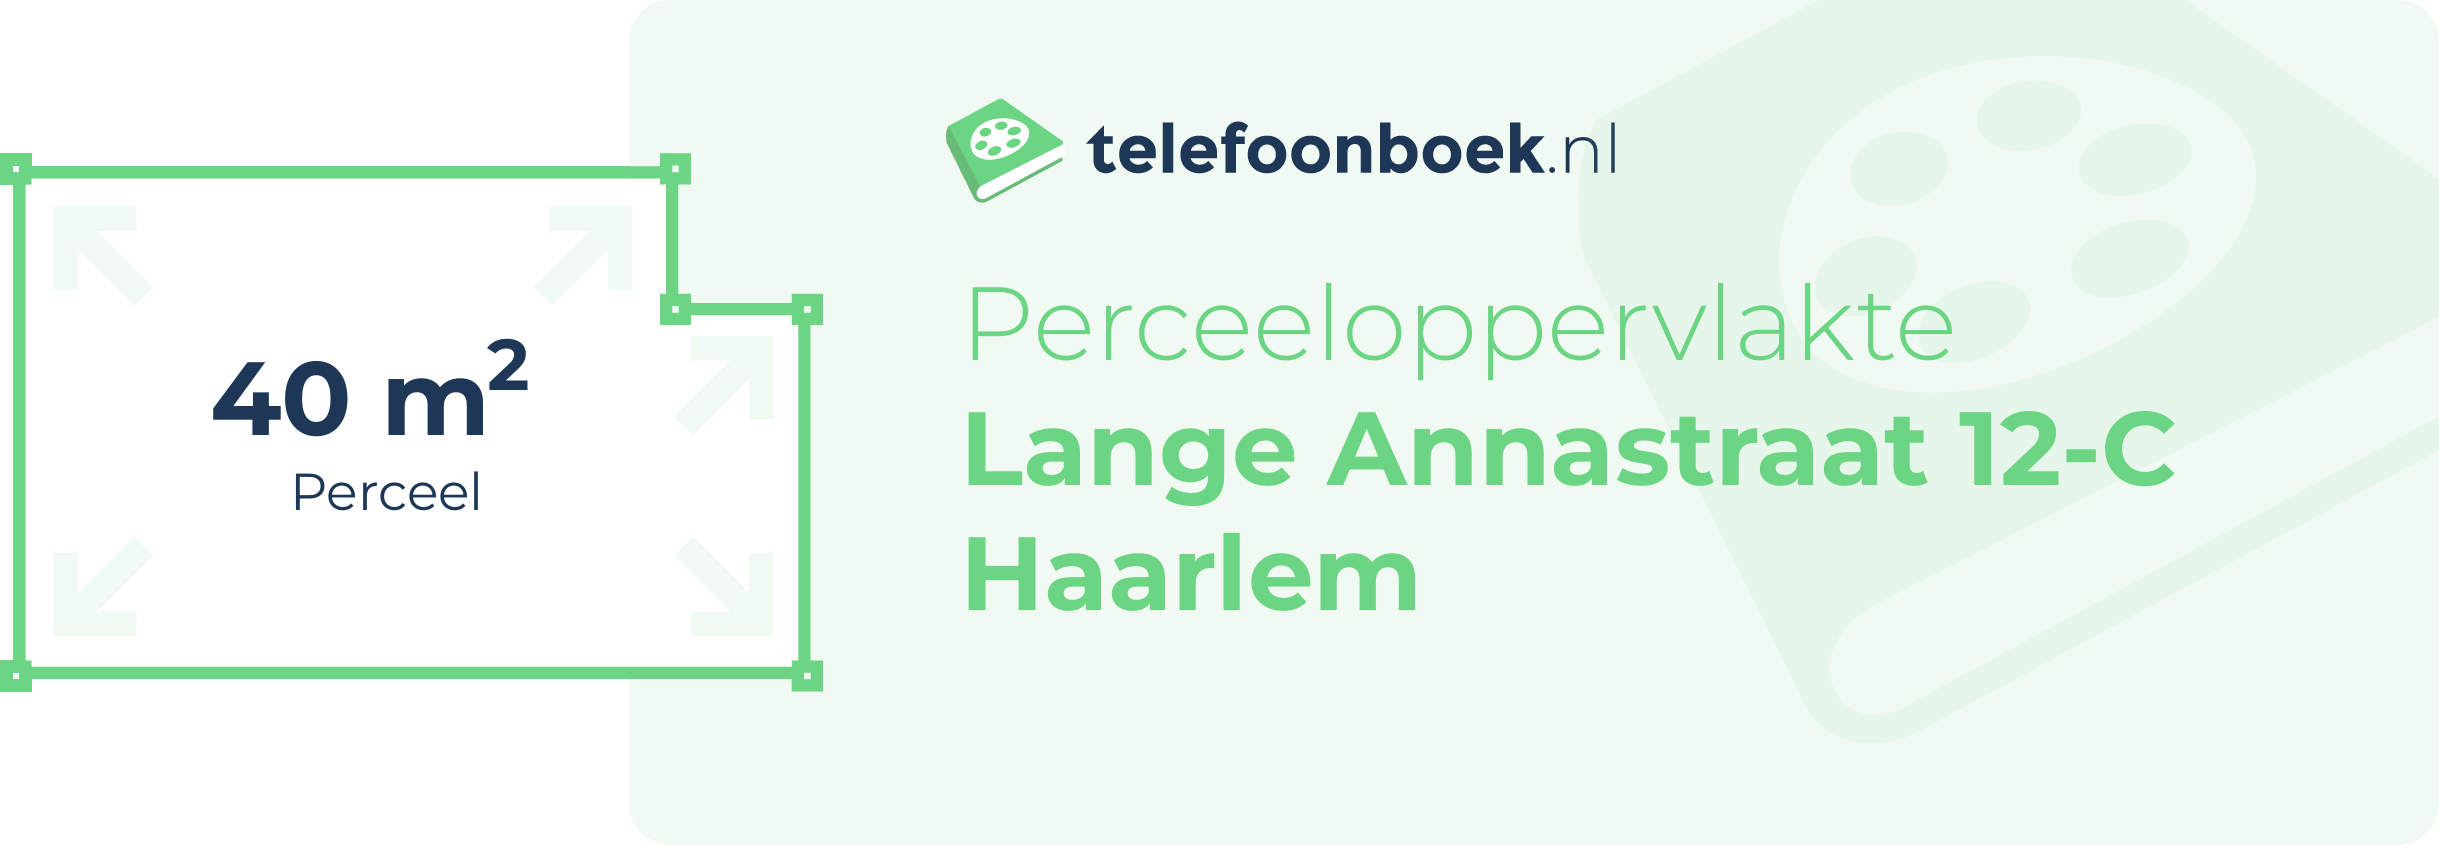 Perceeloppervlakte Lange Annastraat 12-C Haarlem